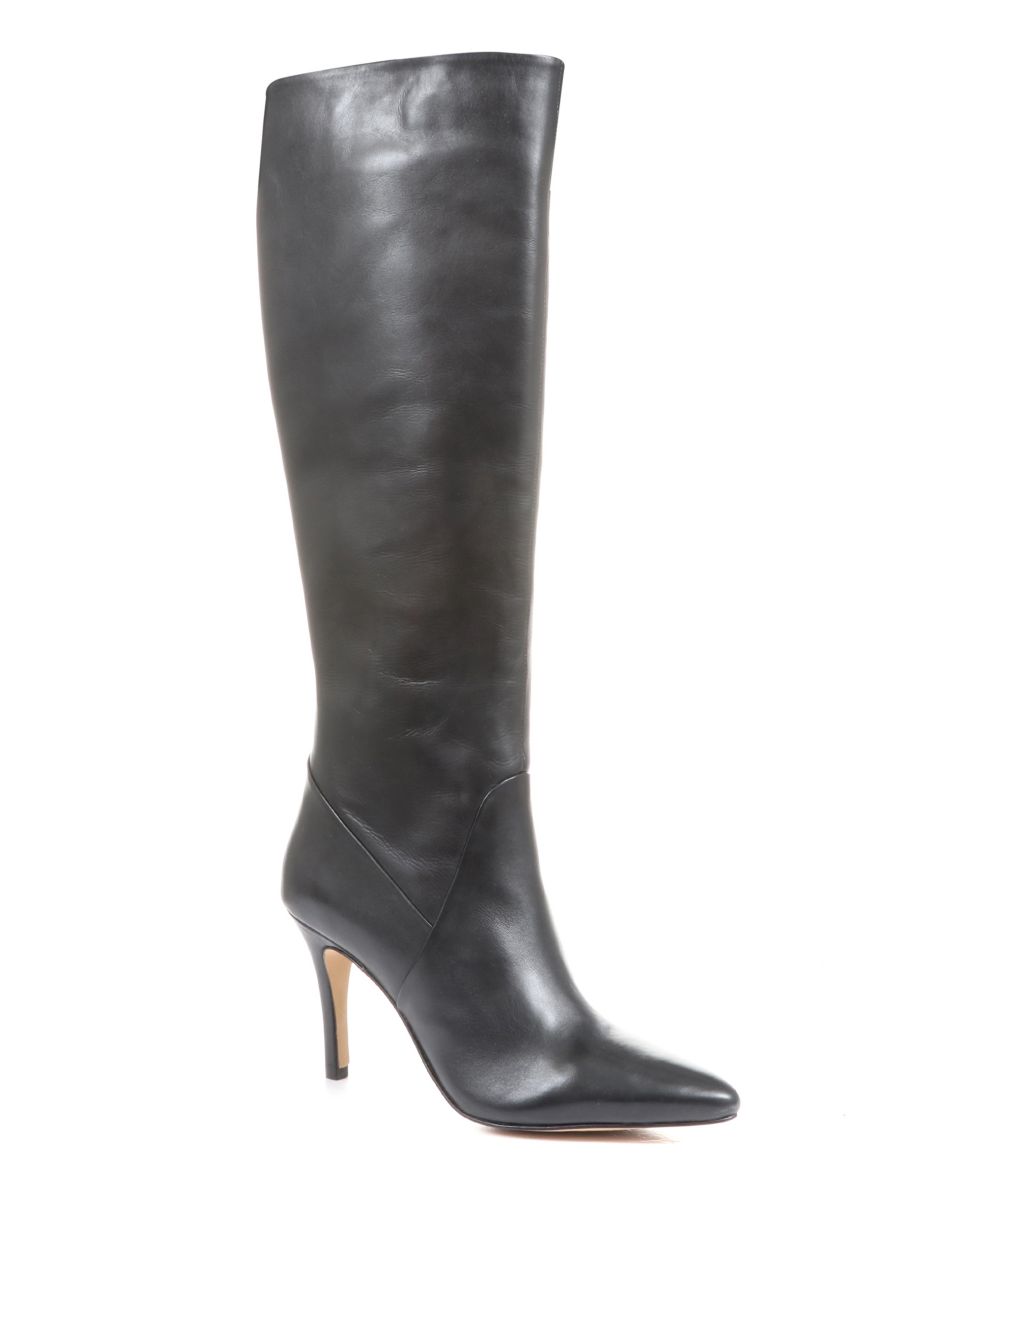 Leather Stiletto Heel Knee High Boots | Jones Bootmaker | M&S